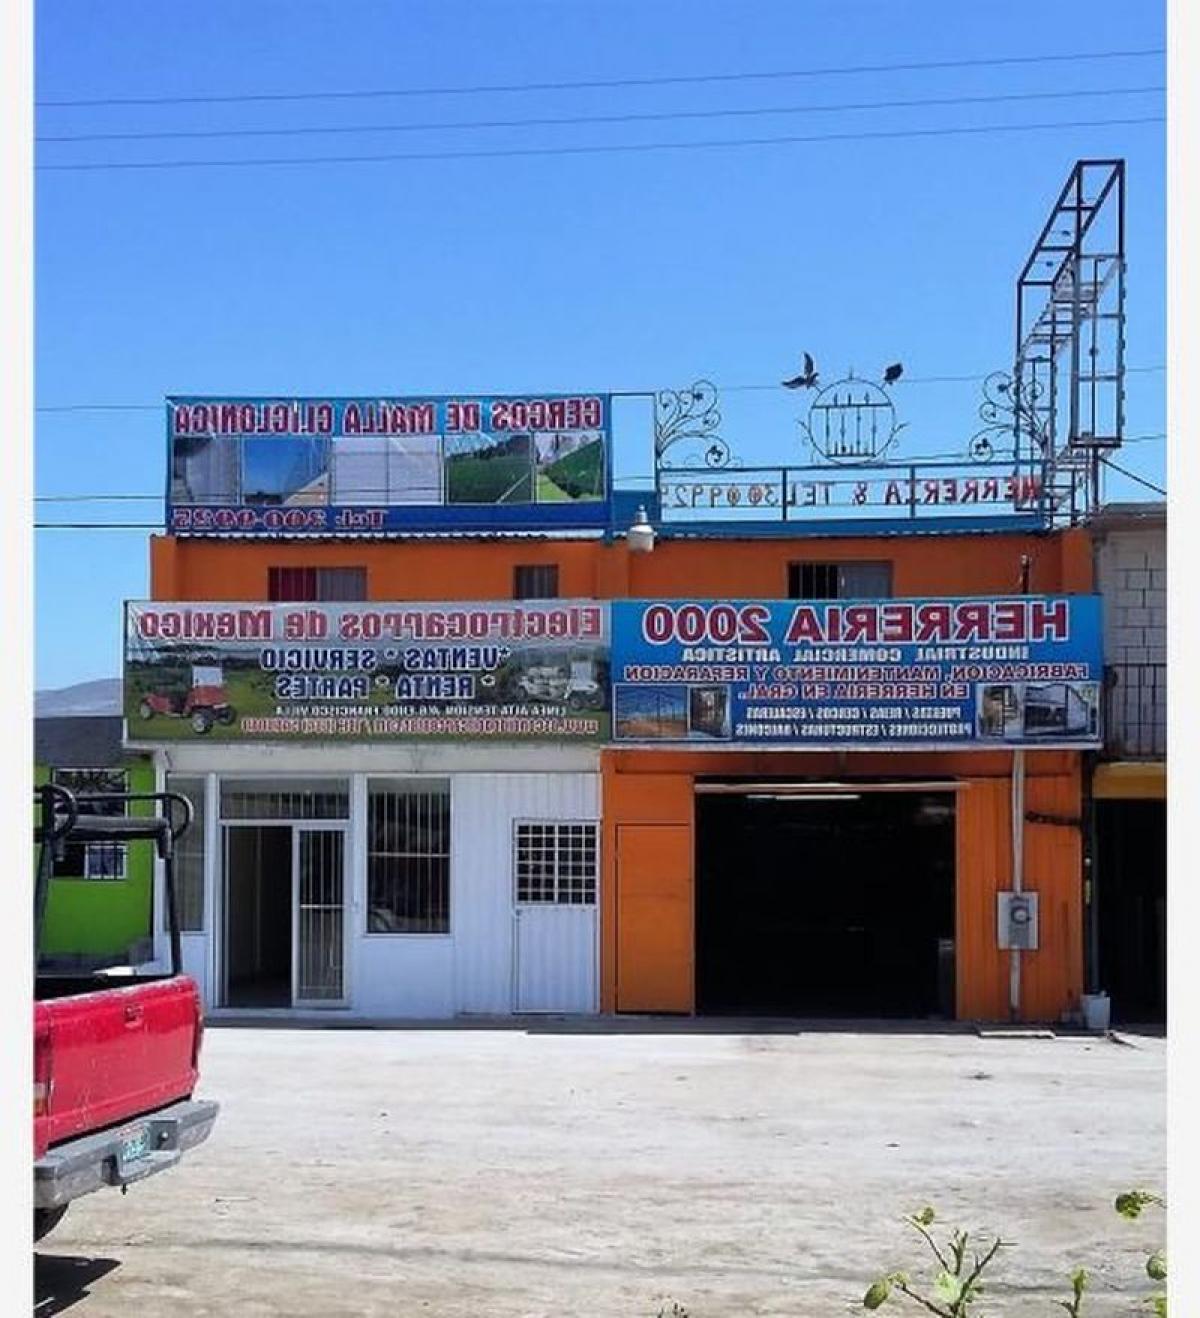 Picture of Apartment Building For Sale in Baja California, Baja California, Mexico